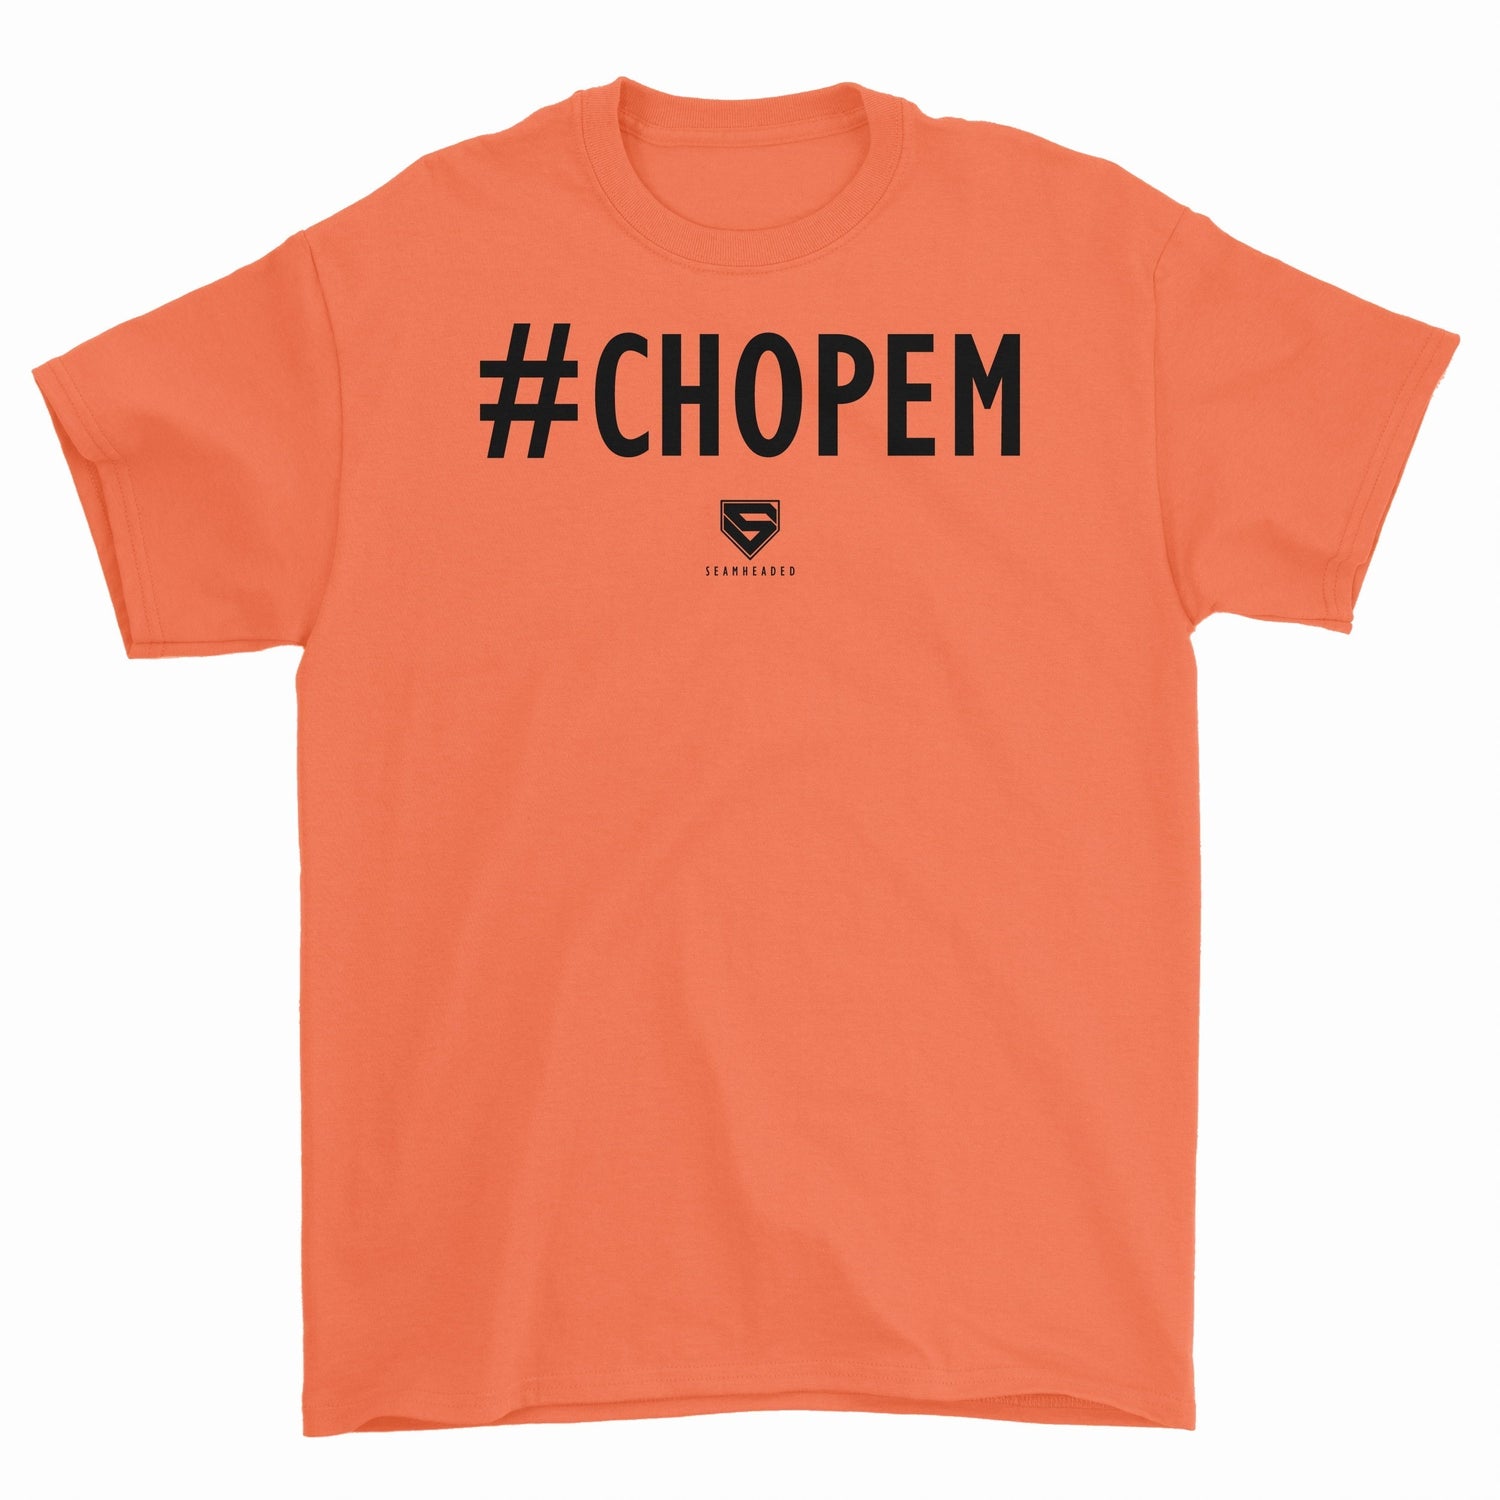 #CHOPEM Men's Tee from Seamheaded Apparel